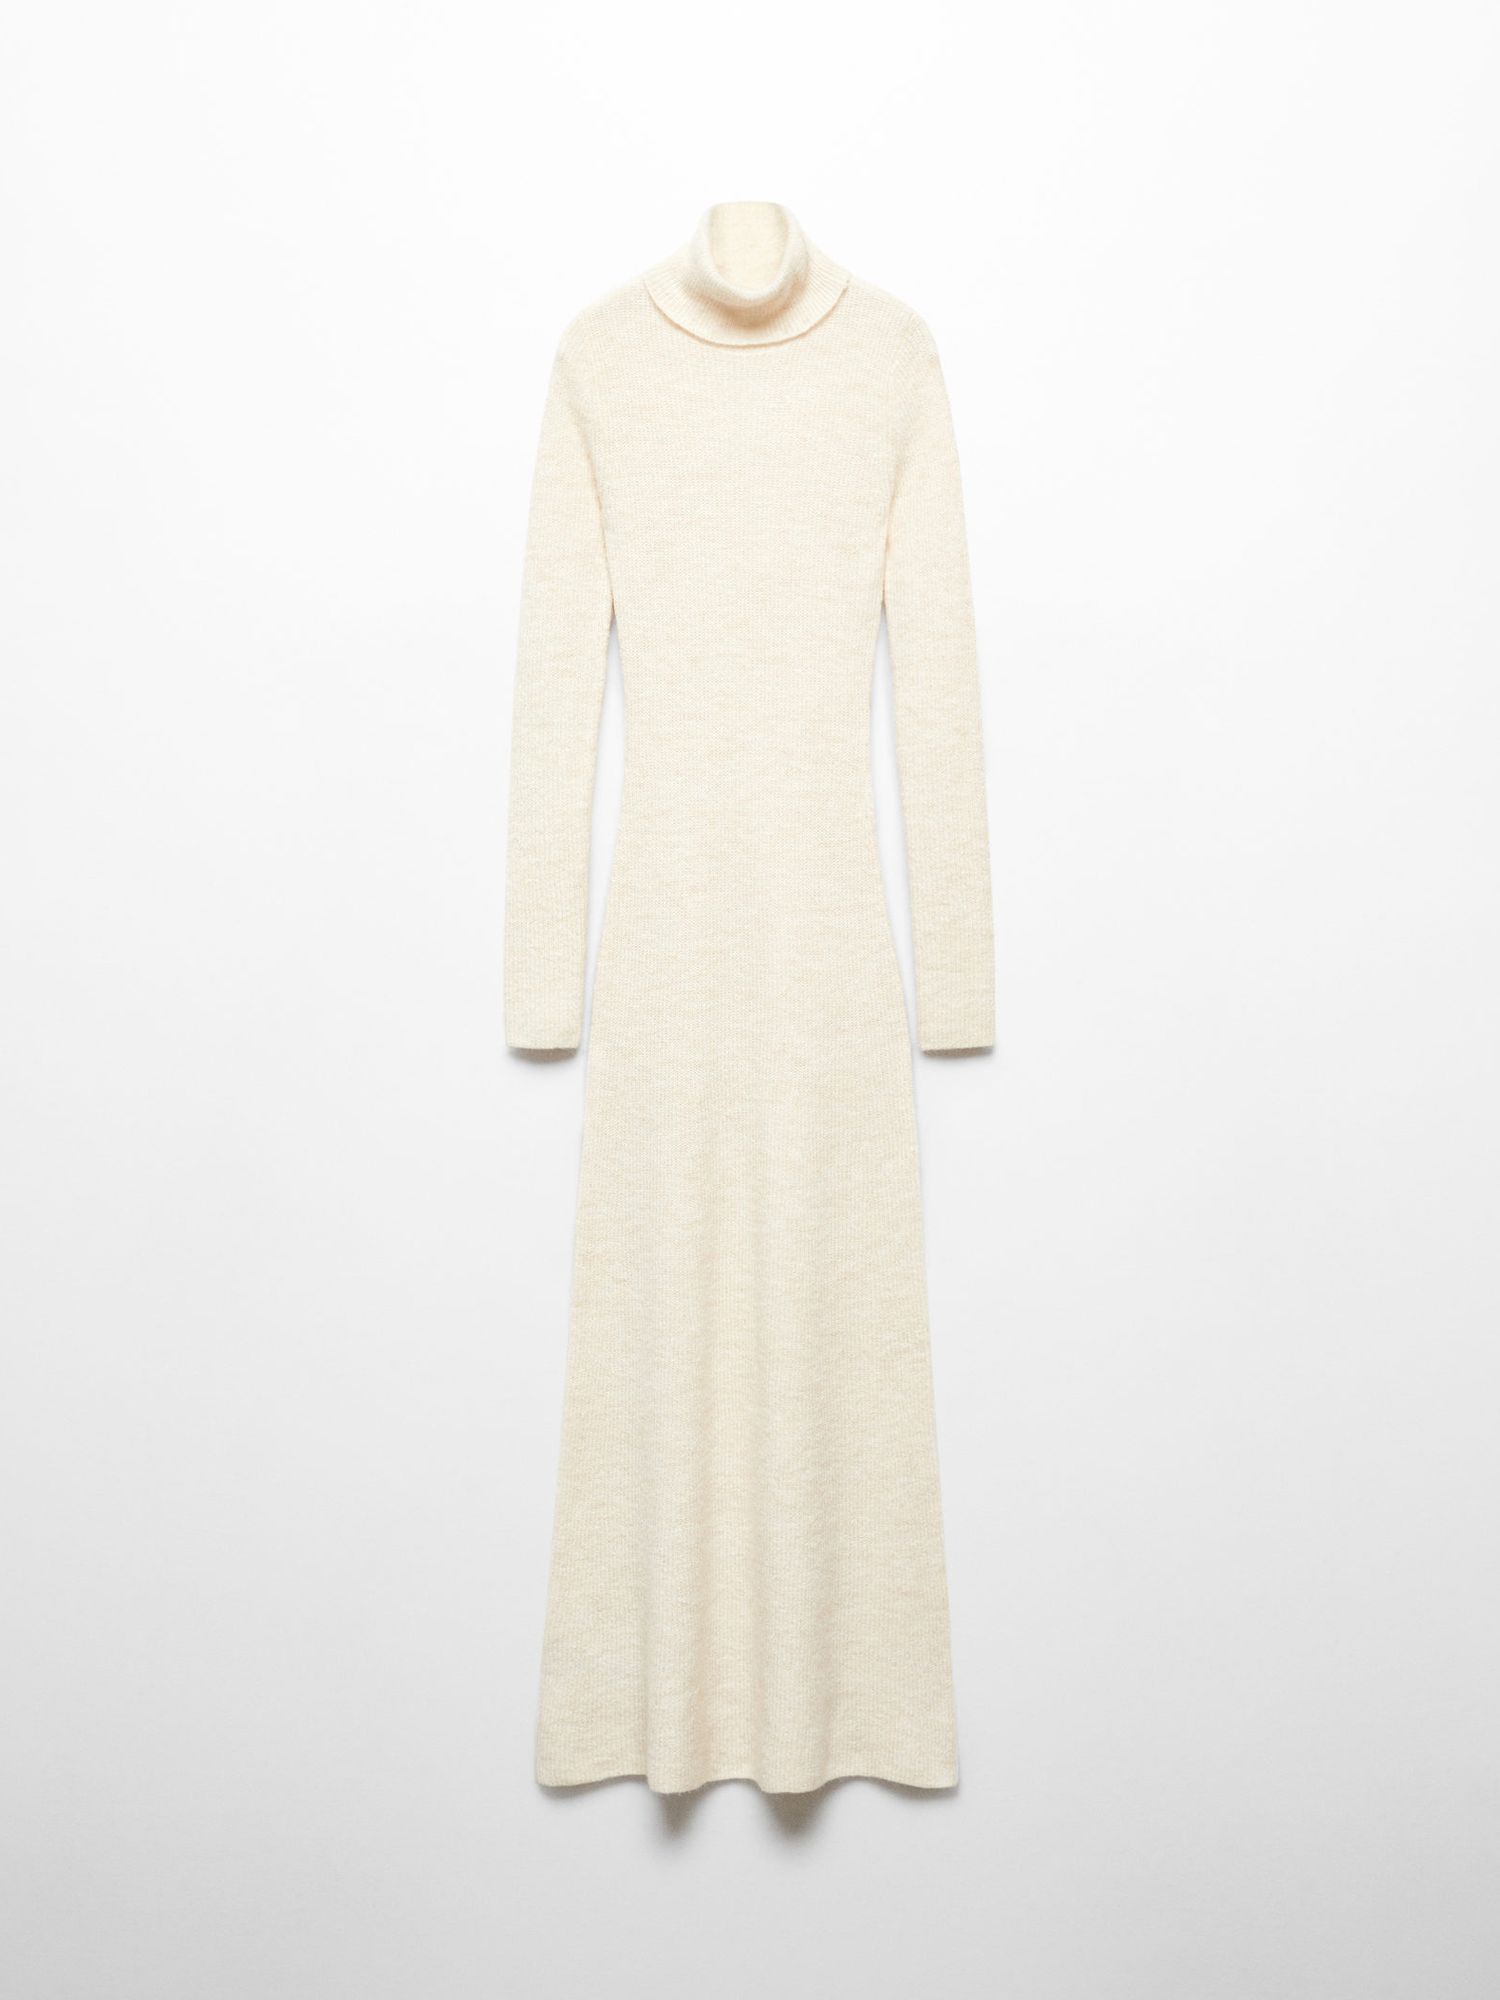 Mango Selena Knitted Roll Neck Midi Dress, Light Beige, 10